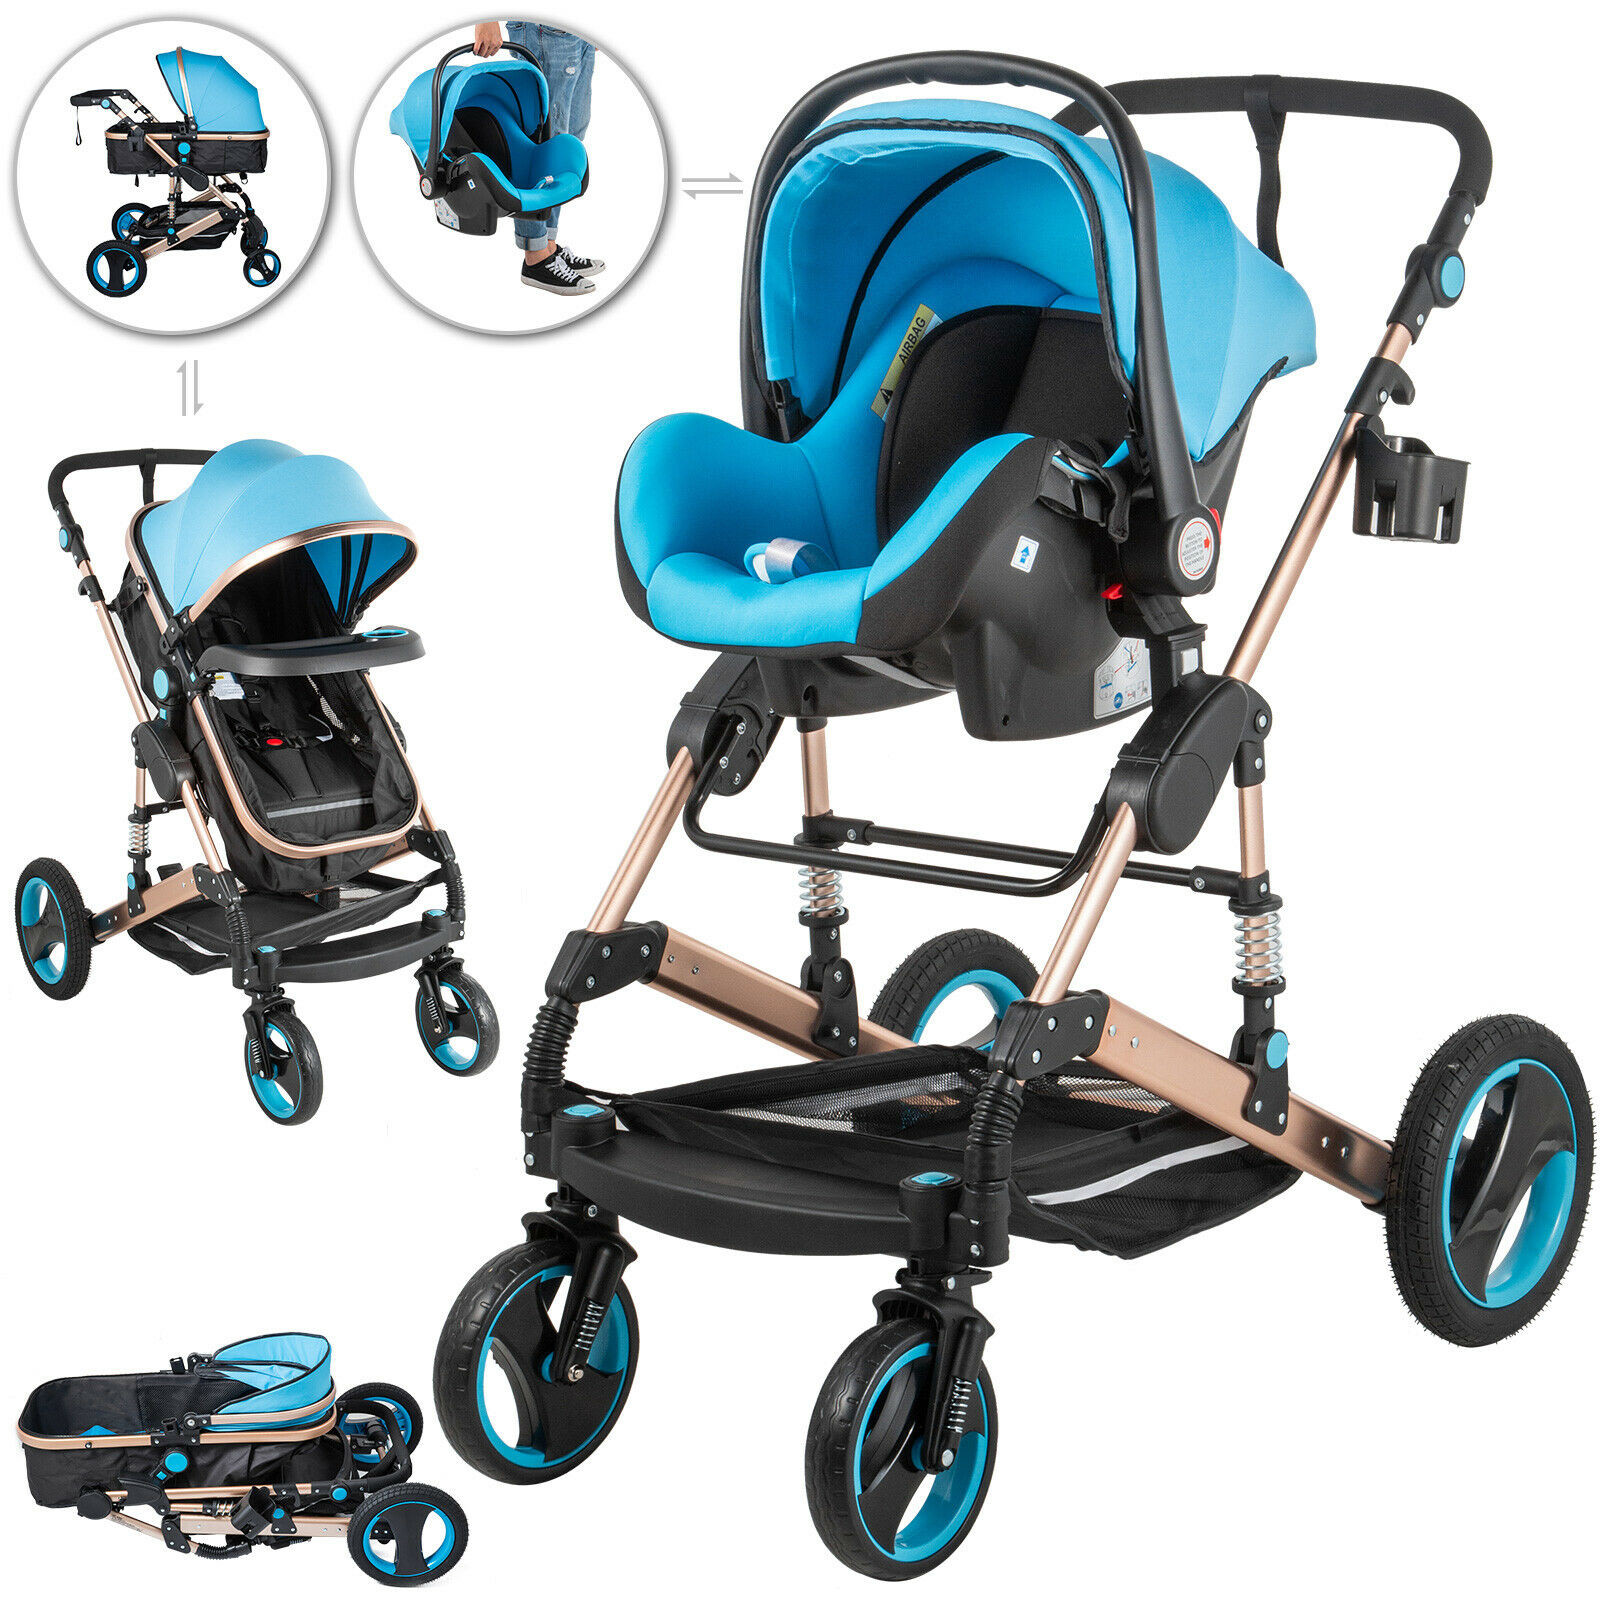 3 seat baby stroller